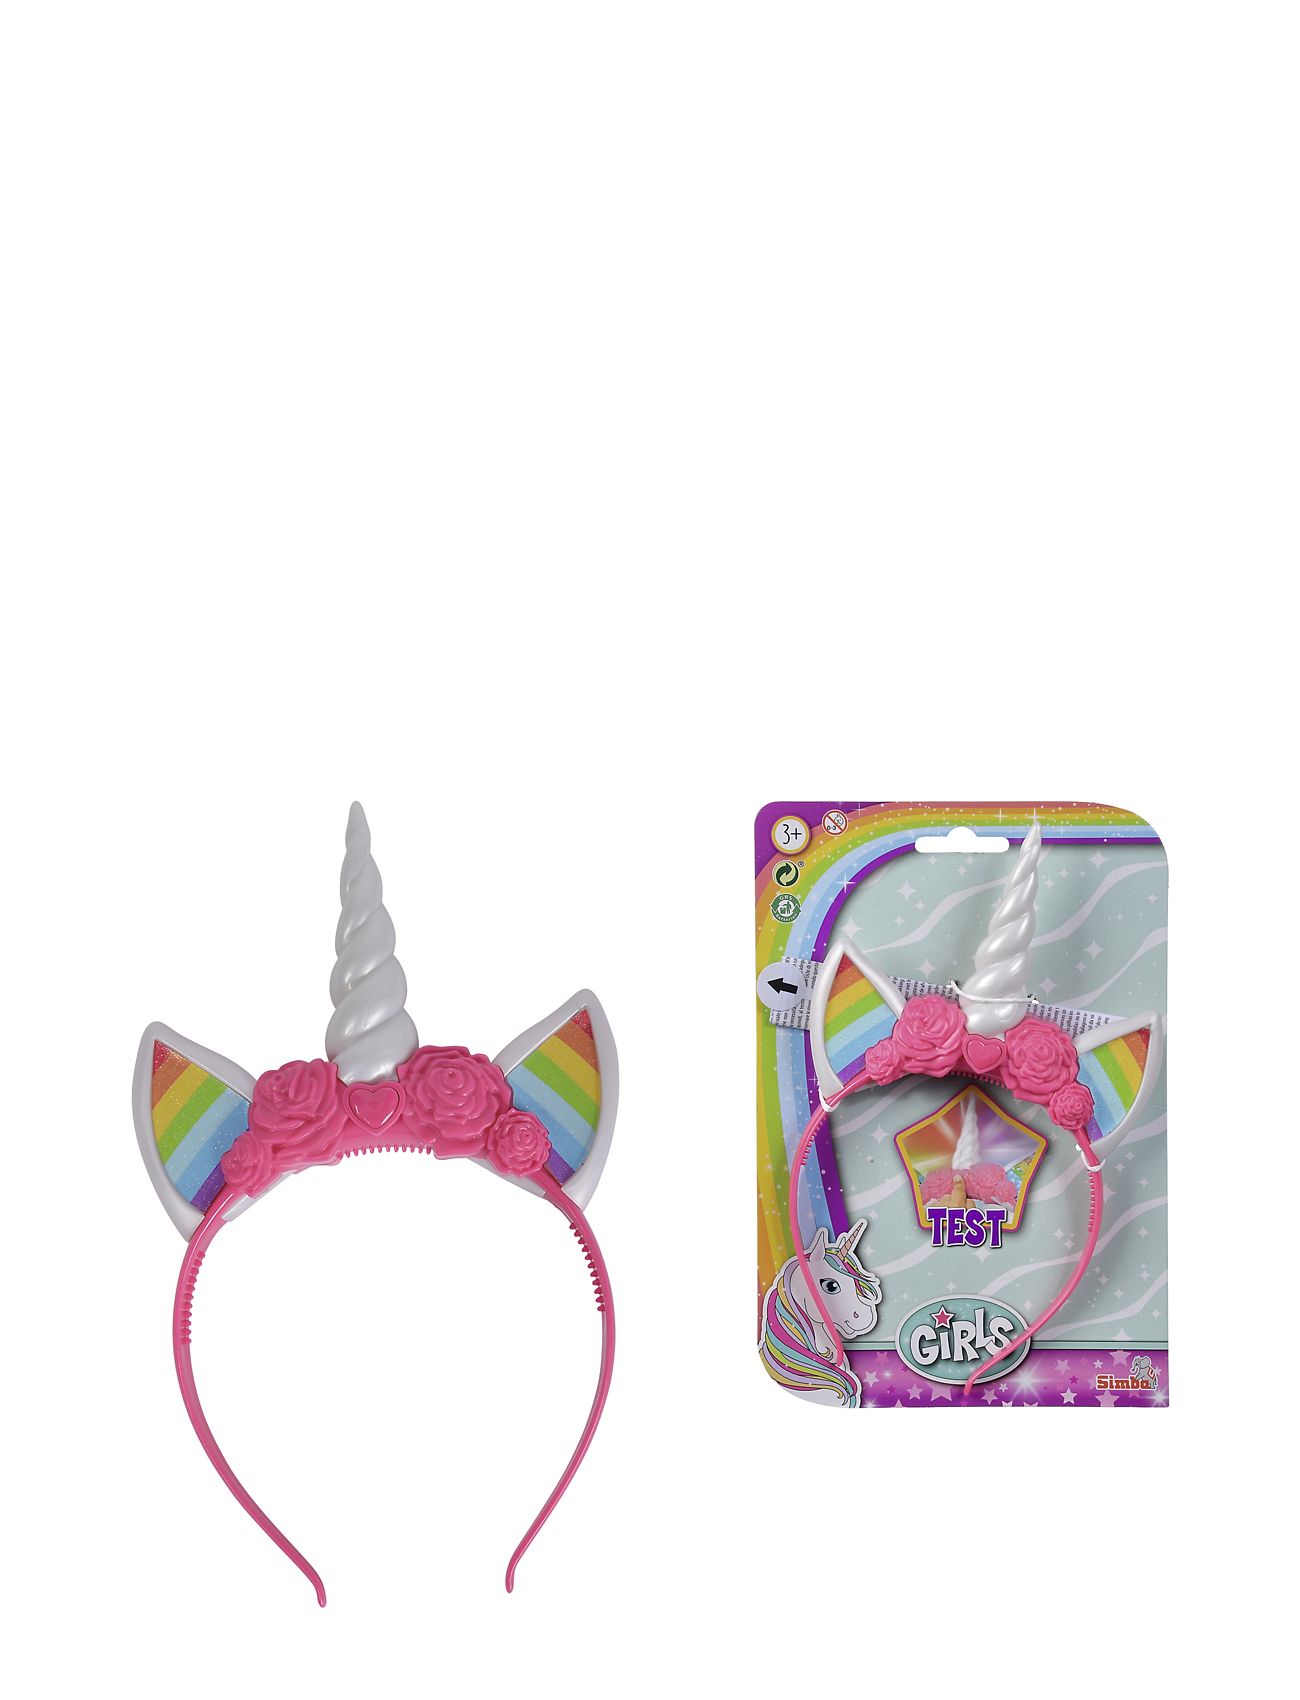 Steffi Girls Unicorn Headband With Light Accessories Hair Accessories Hair Band Pink Simba Toys